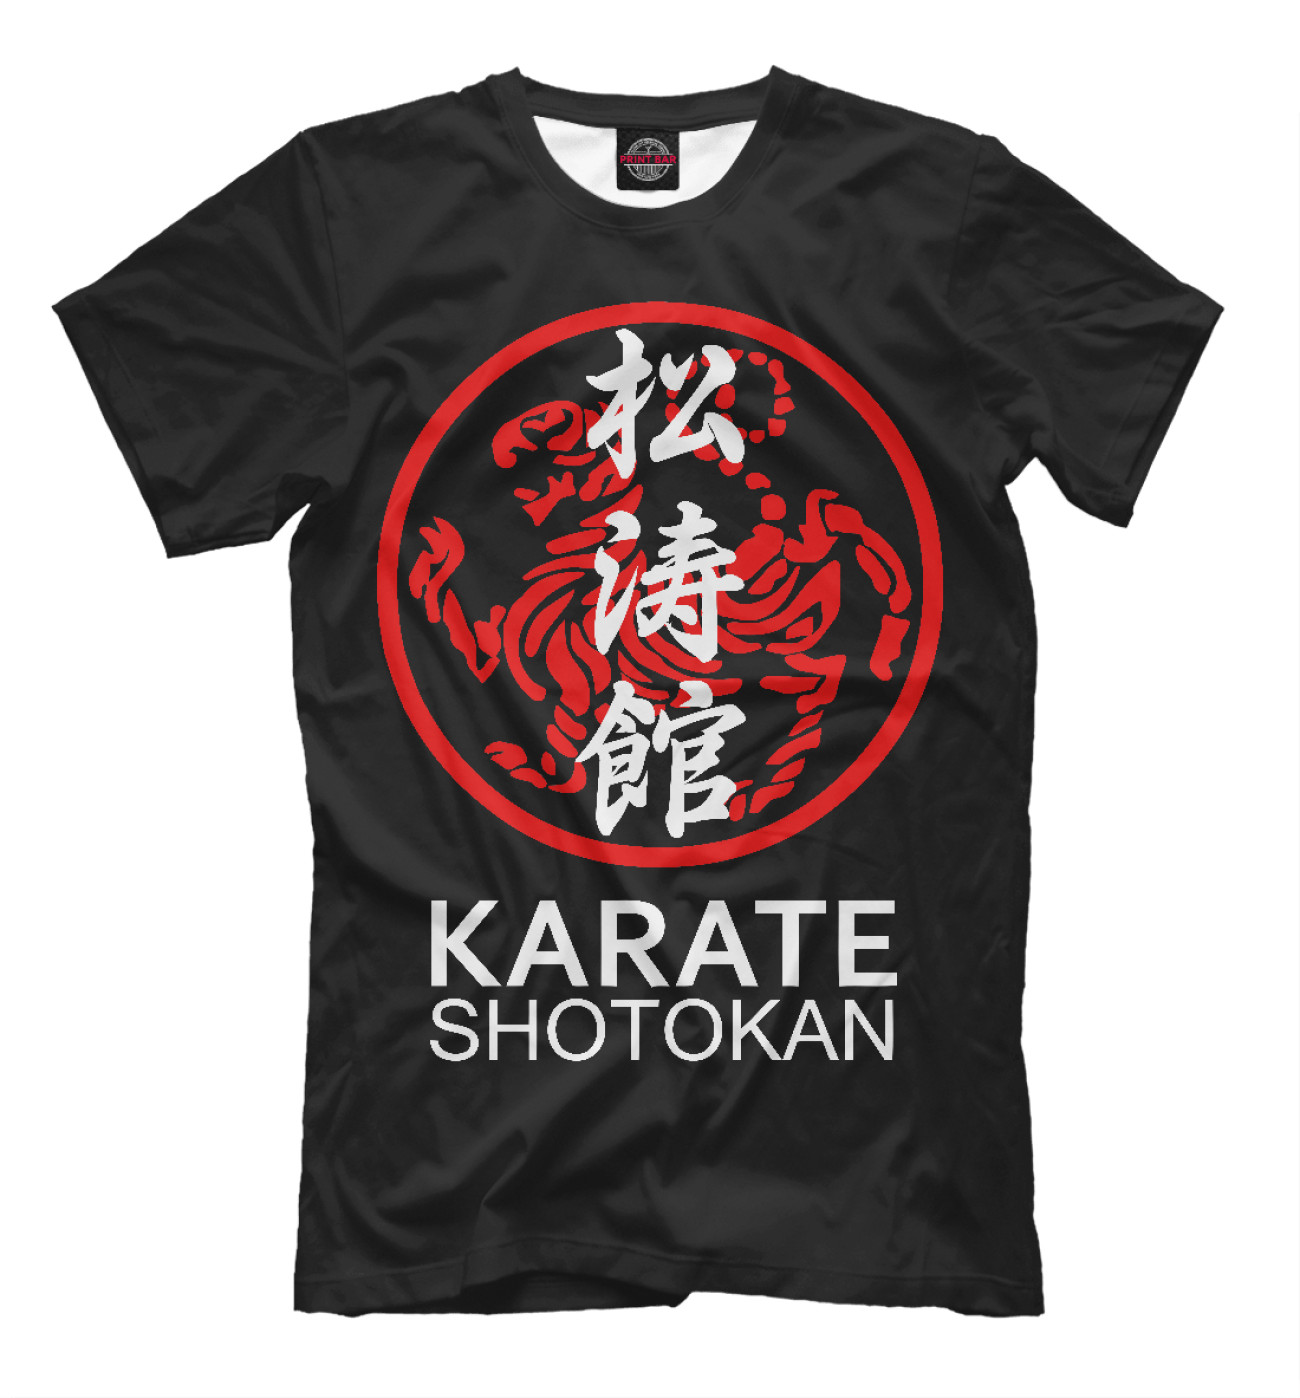 Мужская Футболка Karate Shotokan, артикул: EDI-375978-fut-2